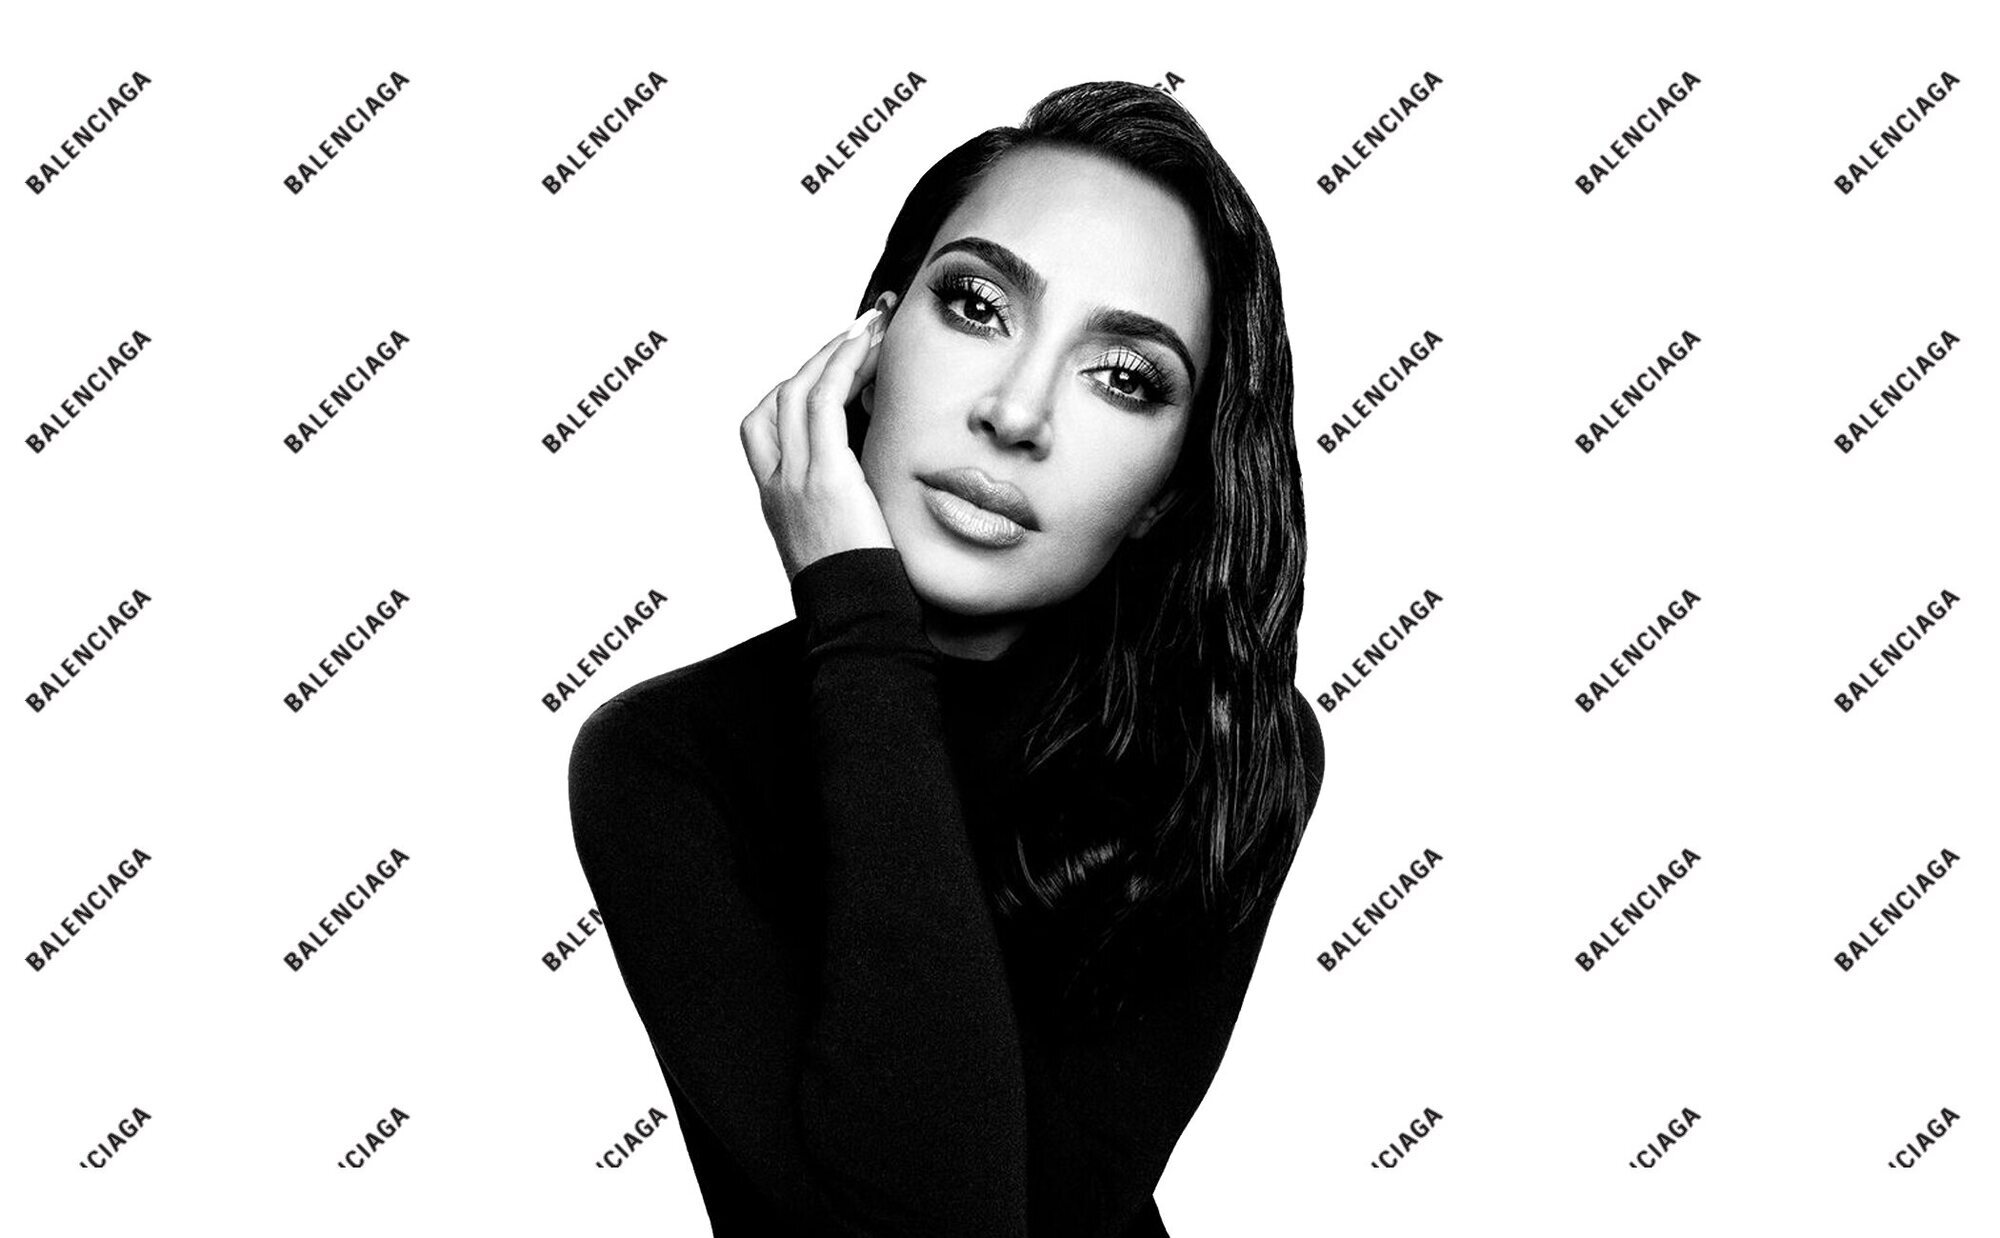 Críticas a Kim Kardashian al ser nombrada embajadora de Balenciaga tras el escándalo de pedofilia